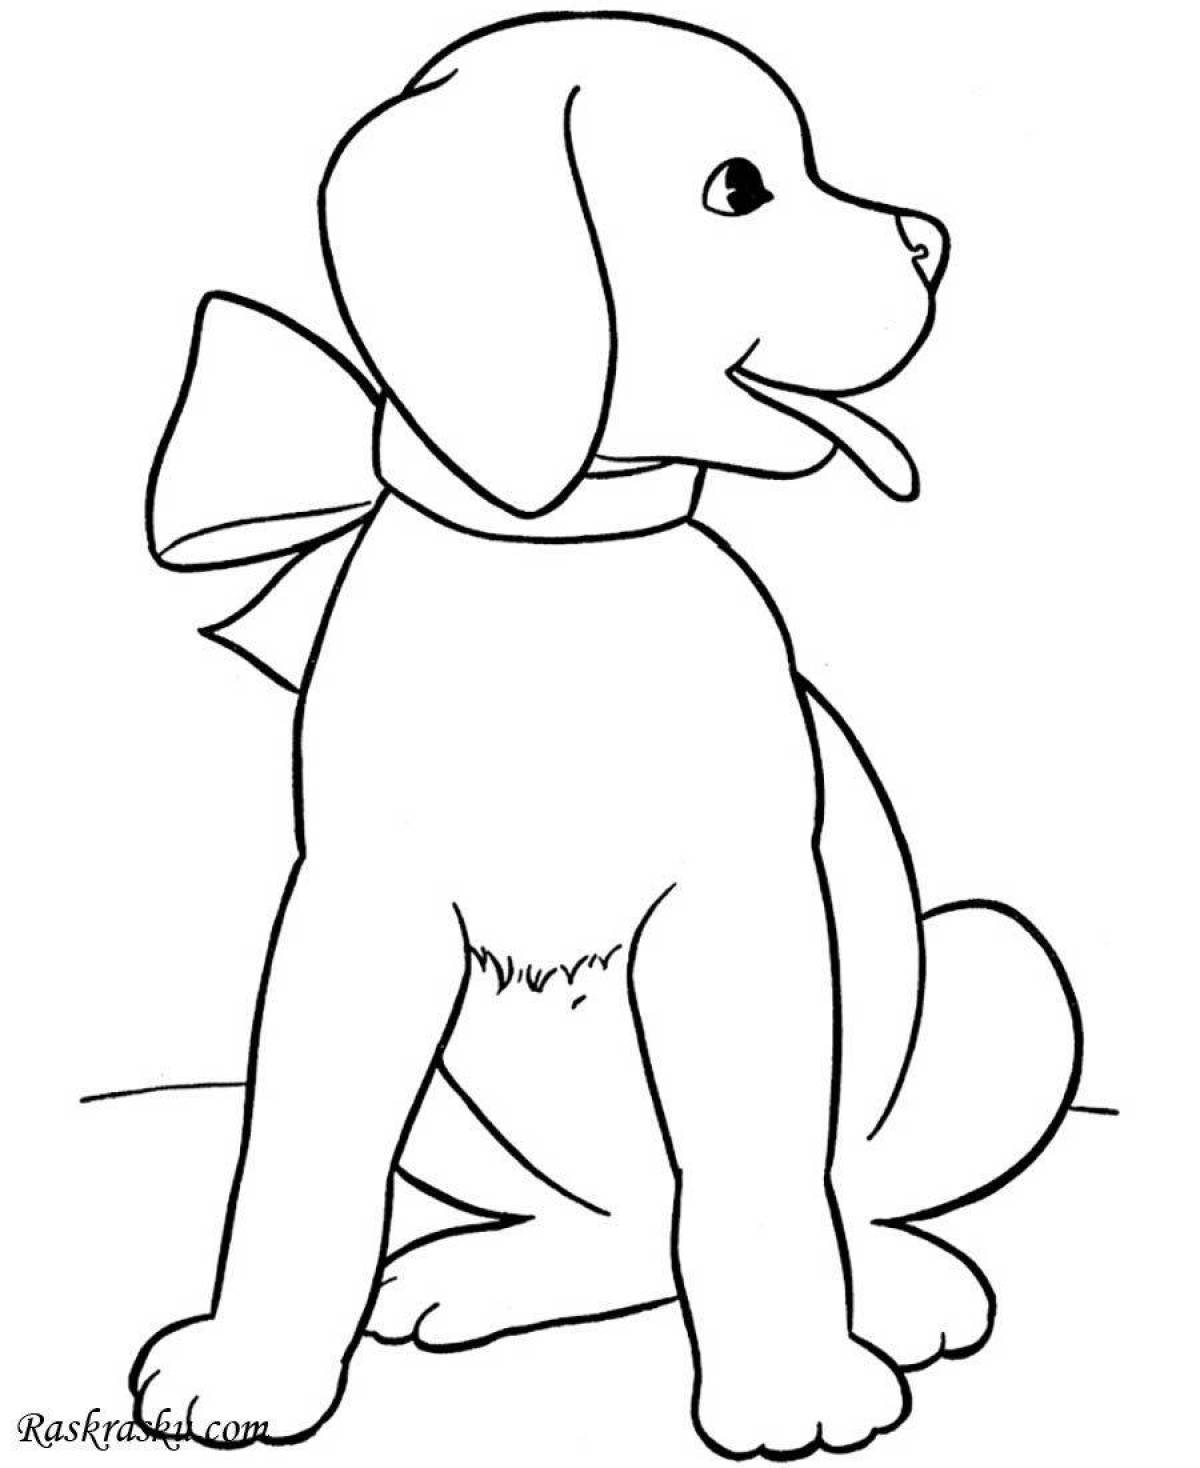 Joyful coloring dog